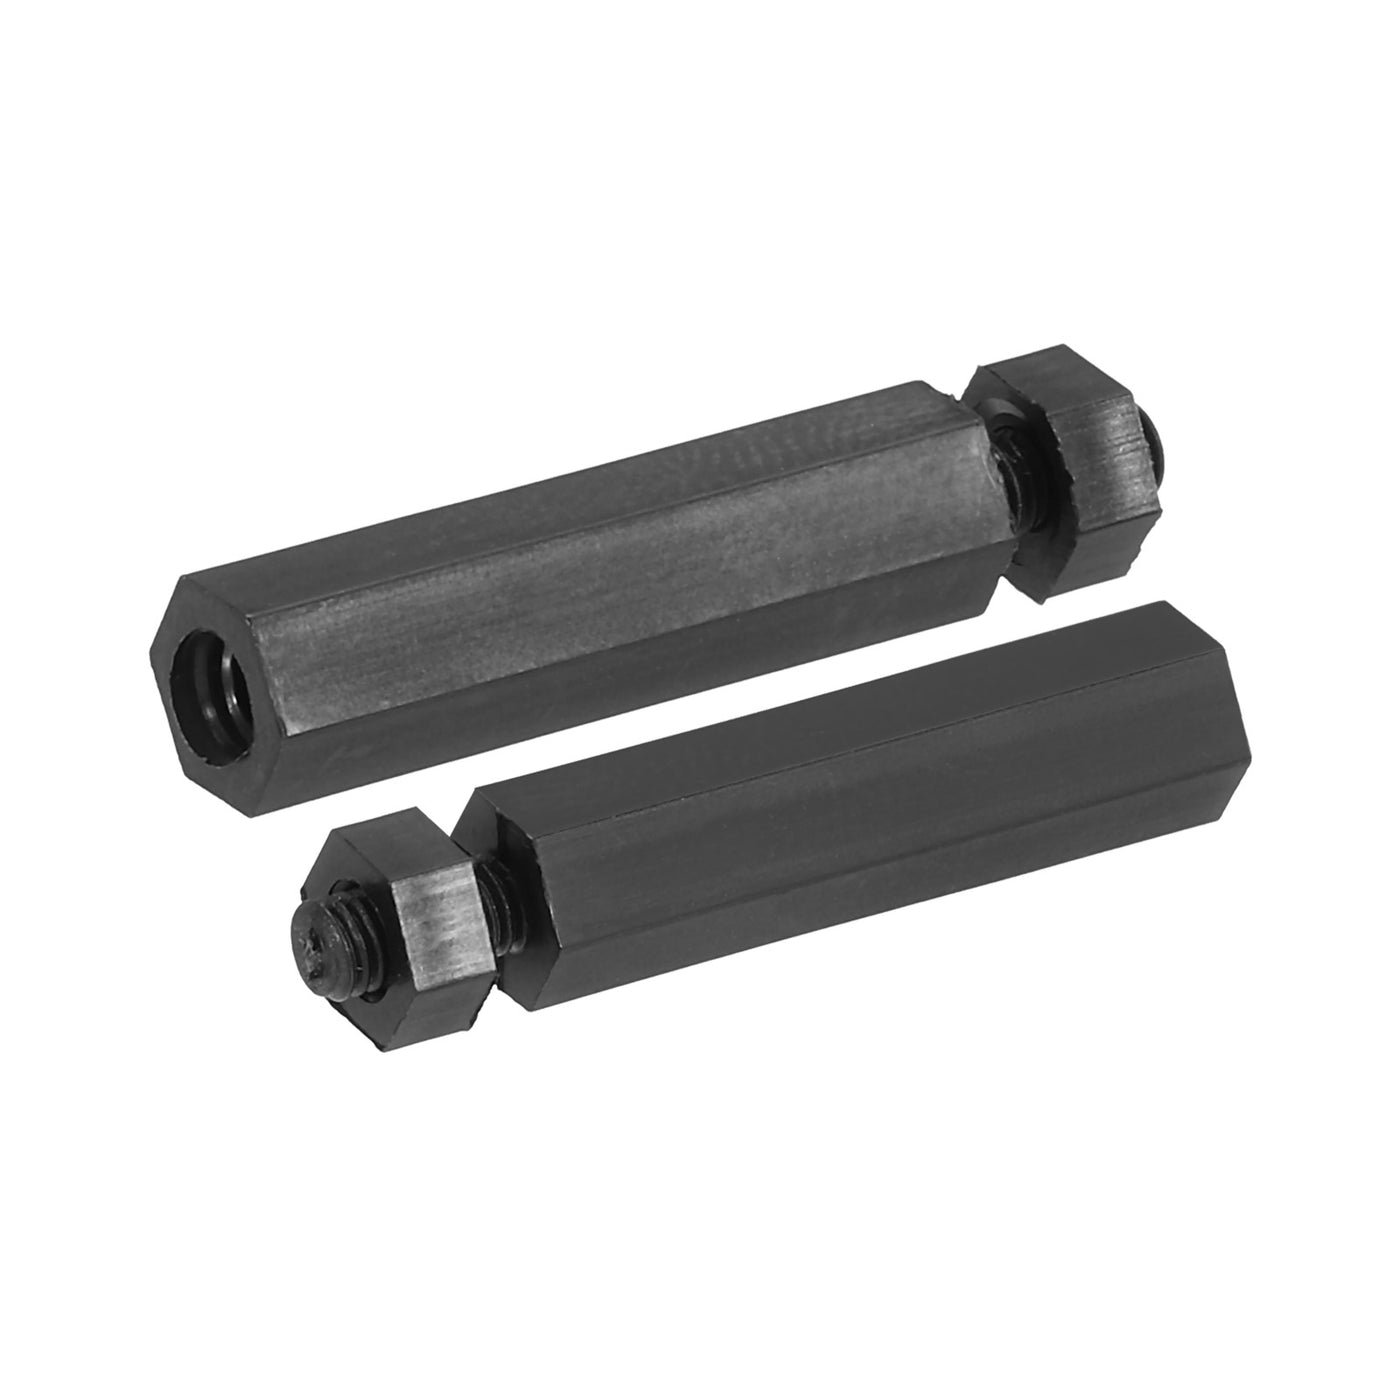 Harfington M3 Nylon Hex Standoff Screws Nuts, 100Pack PCB Threaded Kit(22mm+5mm, Black)